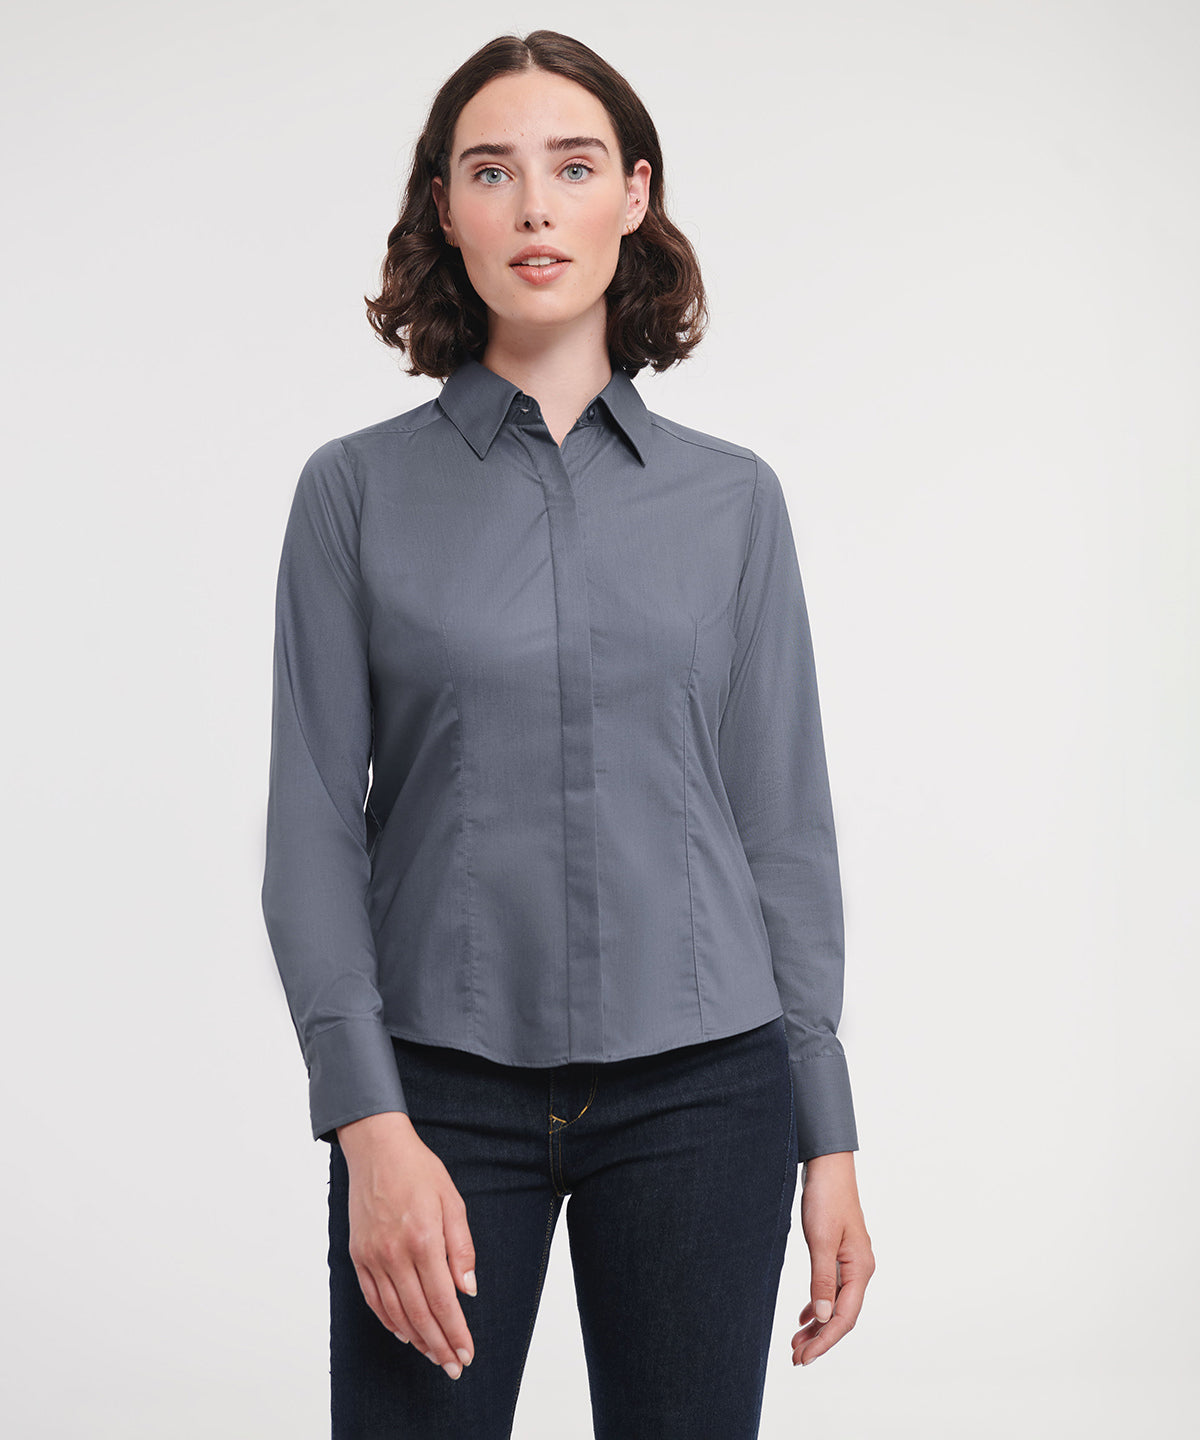 Bolir - Women's Long Sleeve Polycotton Easycare Fitted Poplin Shirt